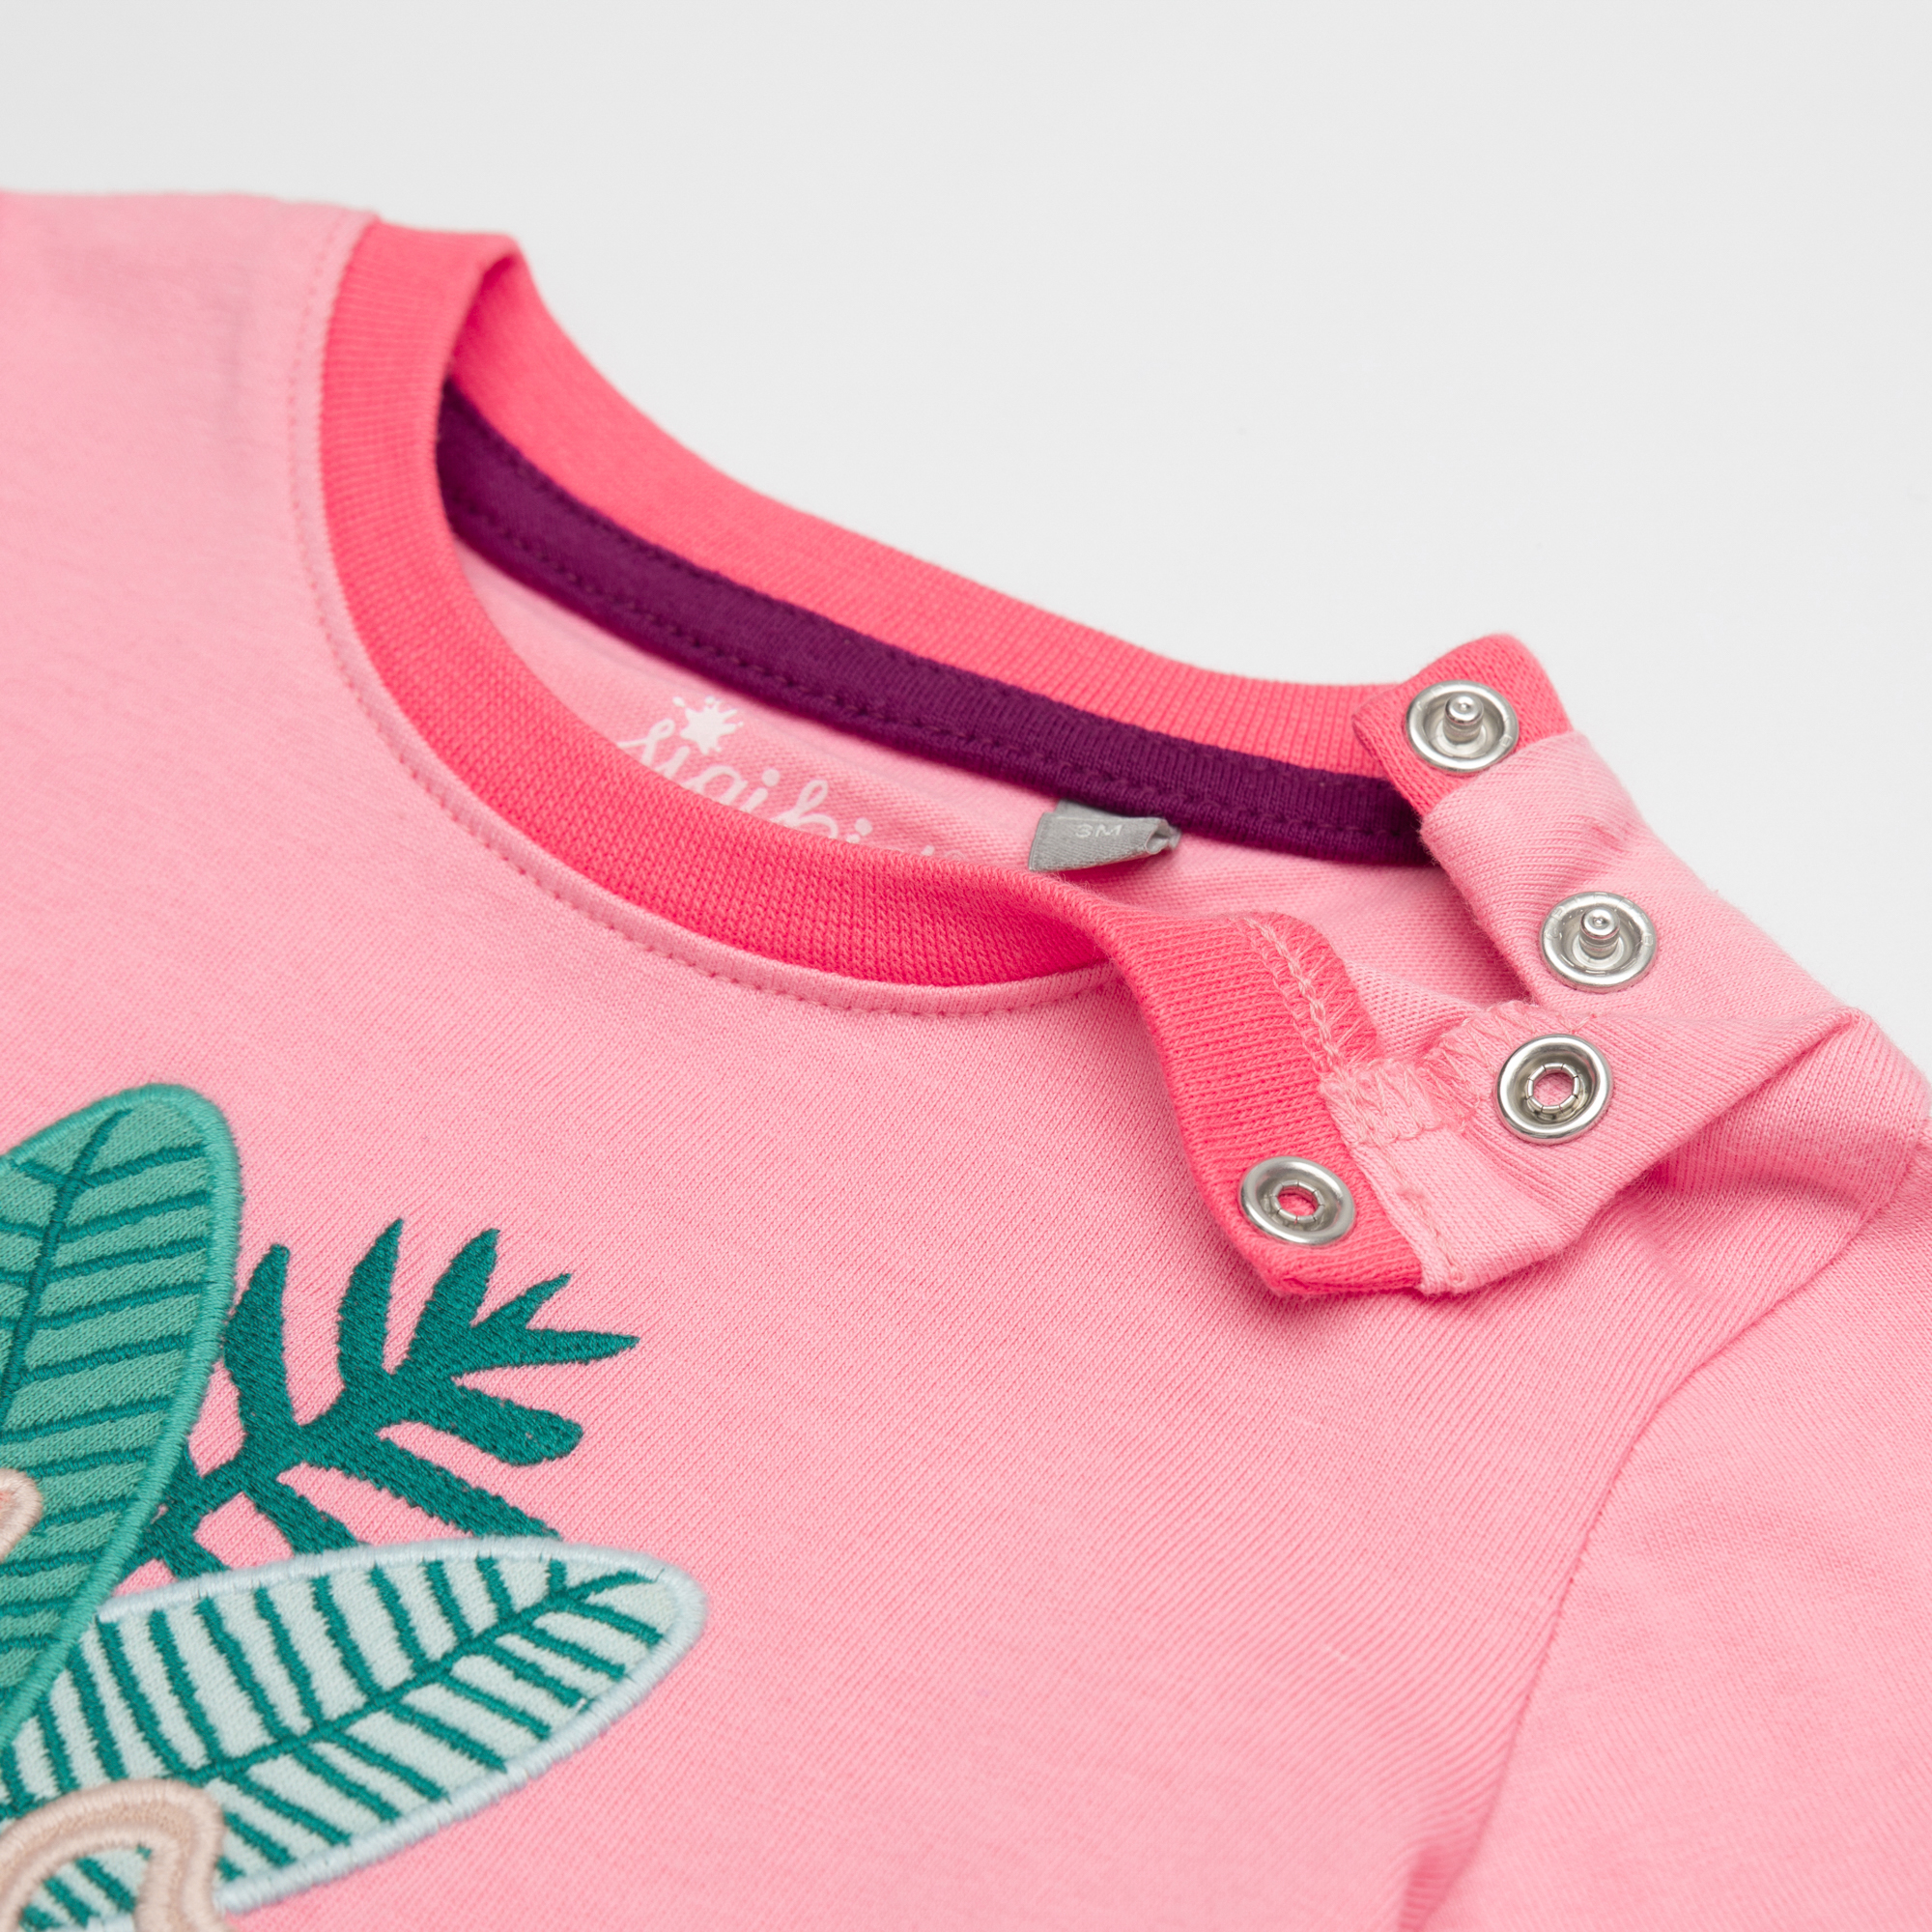 Baby girl appliqué T-shirt, apricot pink